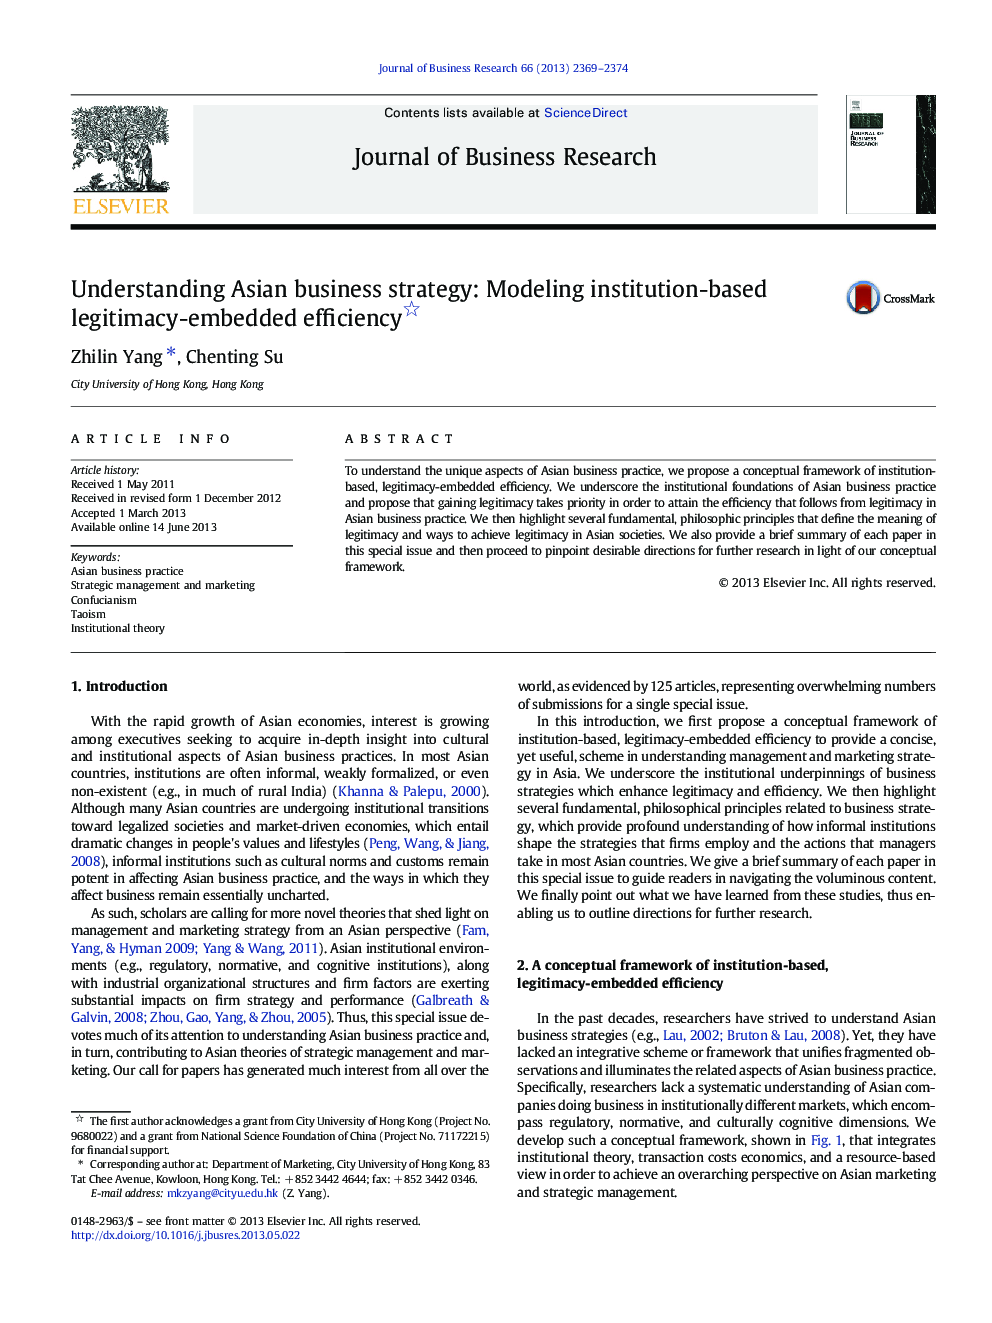 Understanding Asian business strategy: Modeling institution-based legitimacy-embedded efficiency 